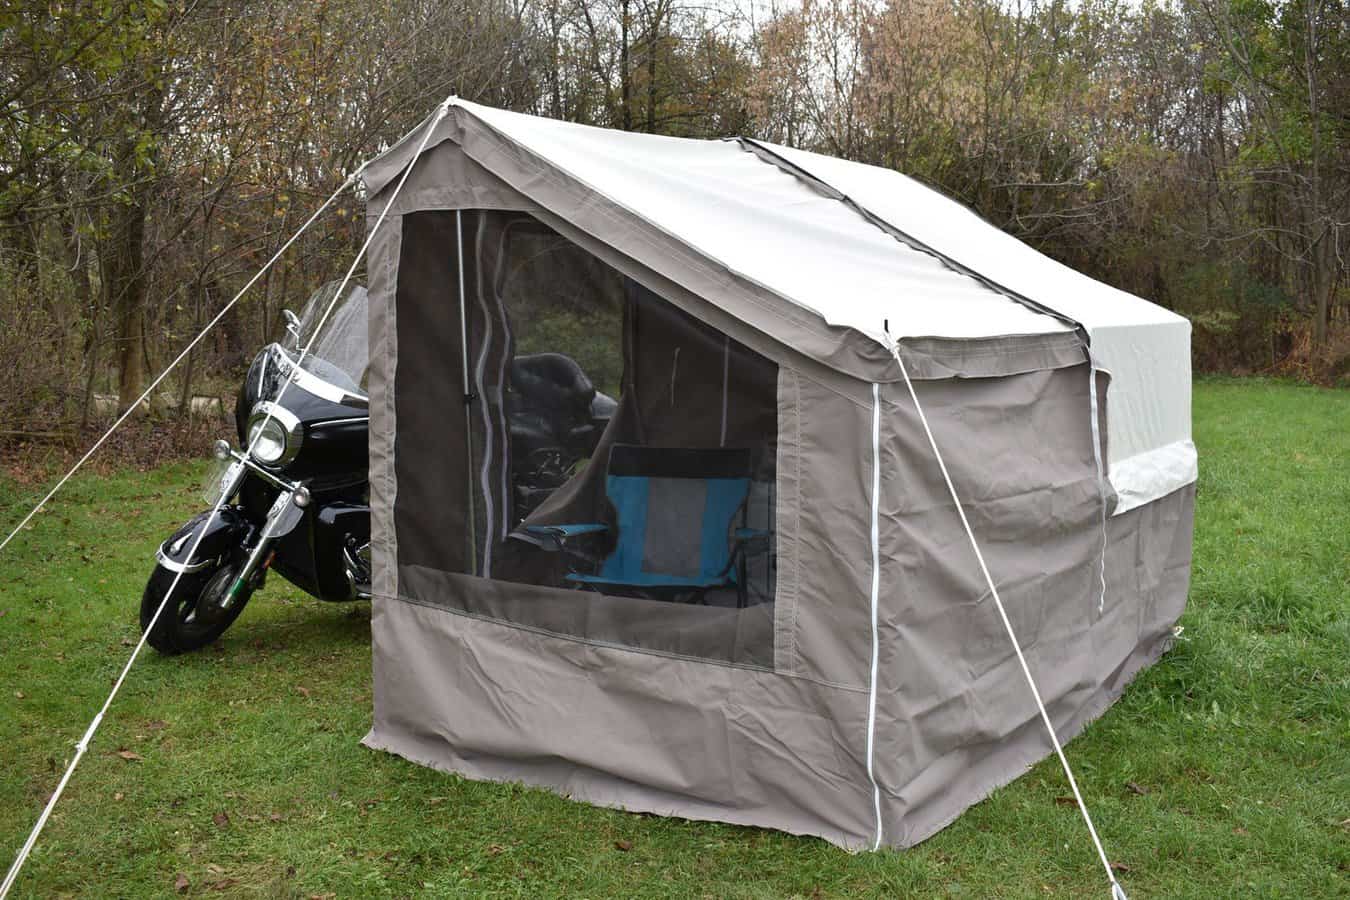 motorcycle camper trailer